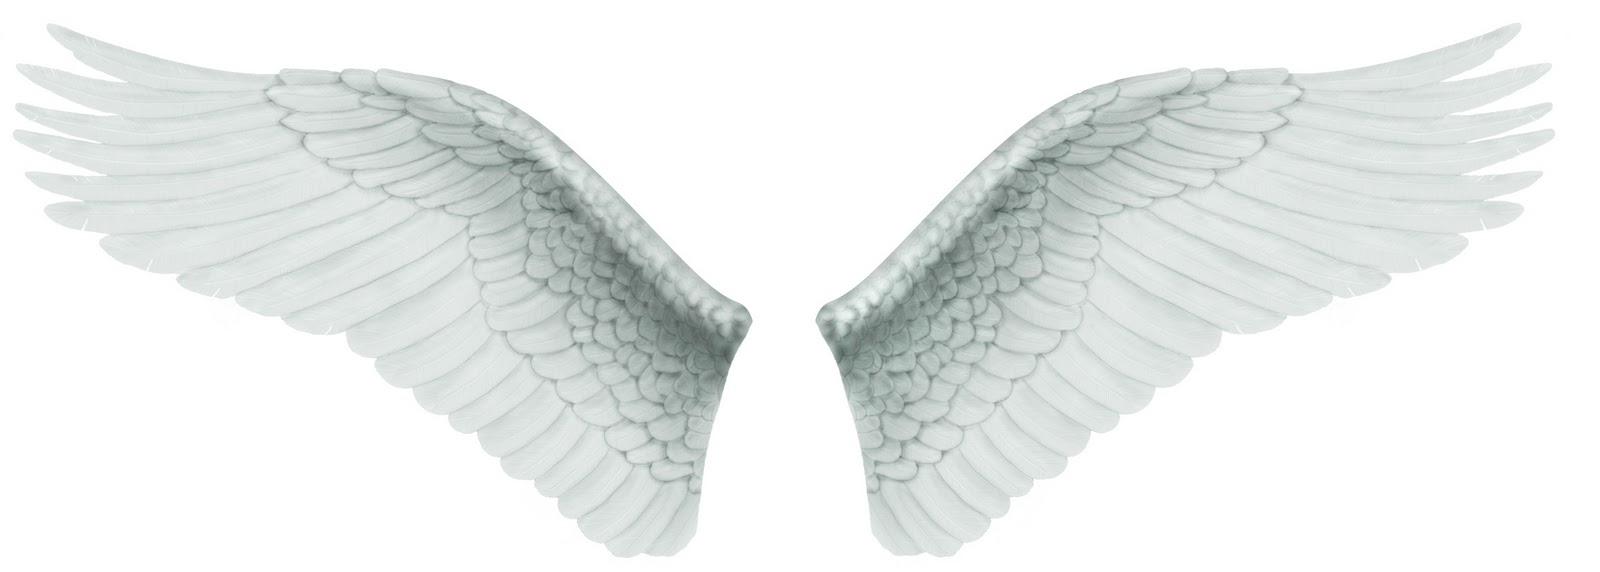 Psd Files Free Download: Angel wings,angel wing tattoos,angel wing 